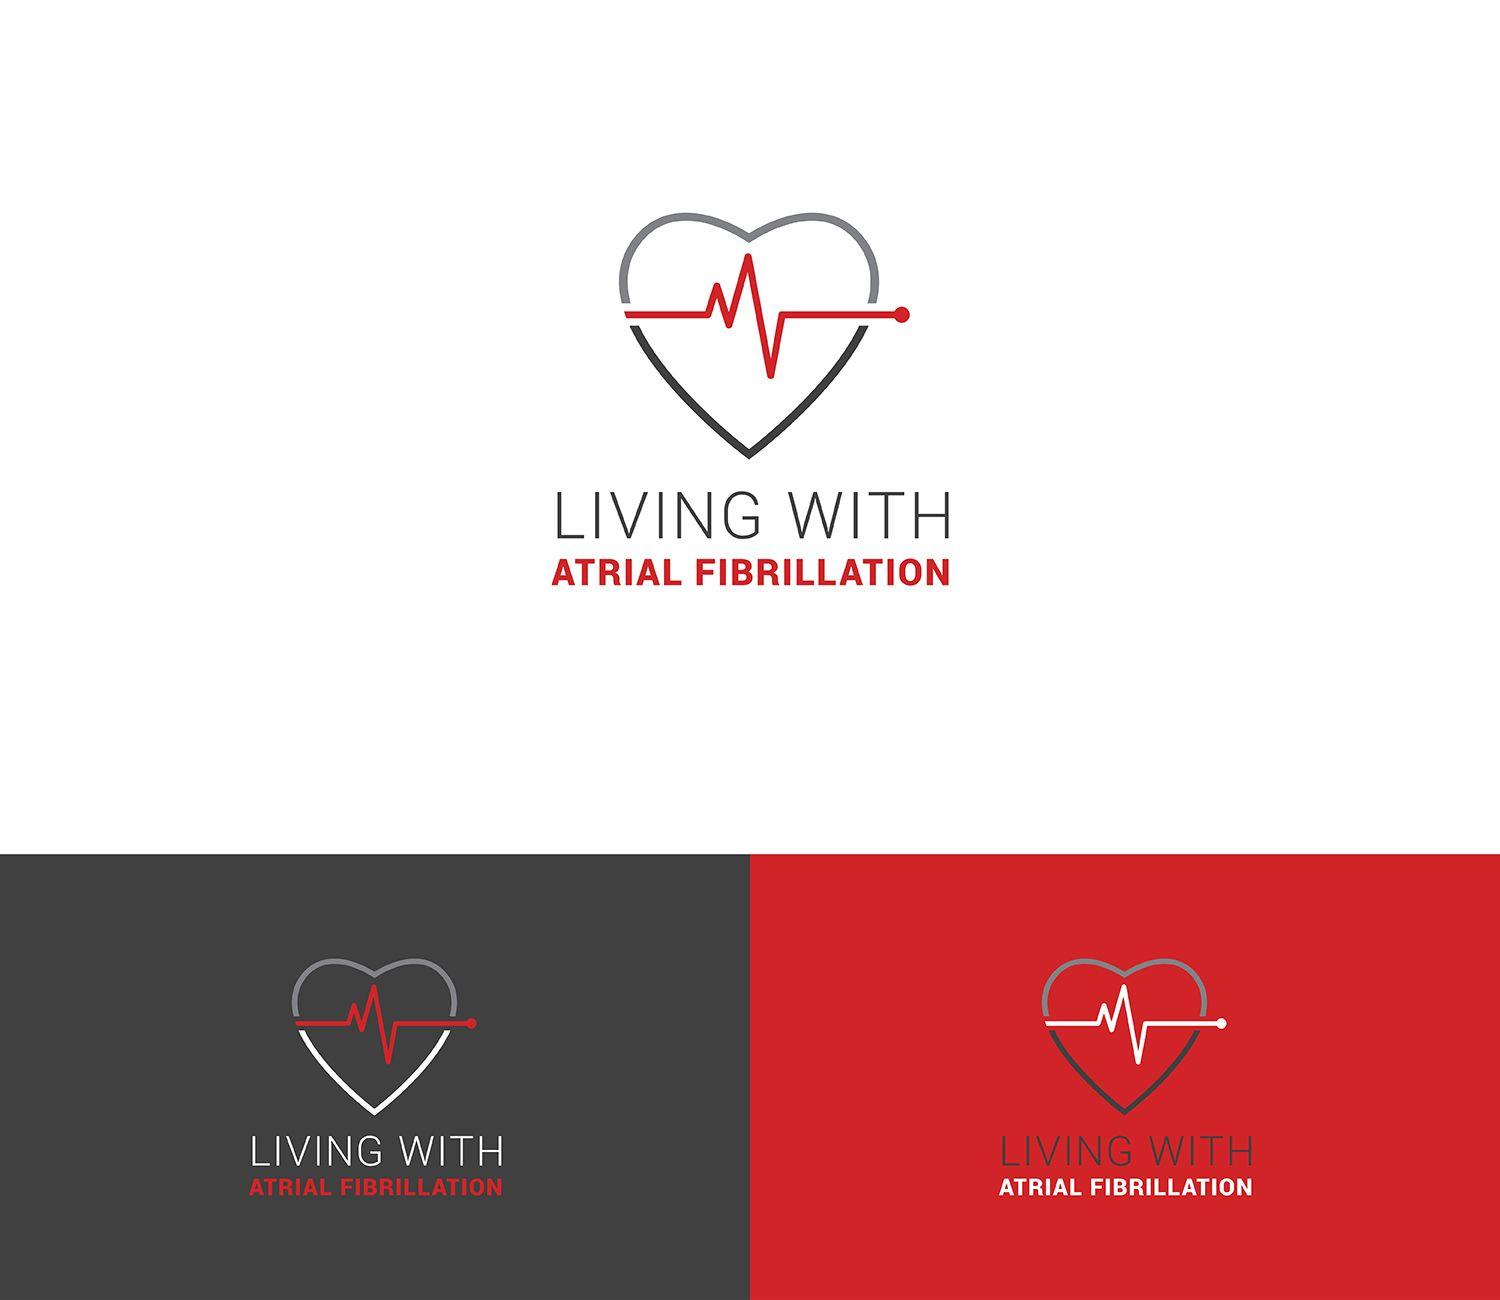 EKG Logo - Masculine, Conservative, Health And Wellness Logo Design for Living ...